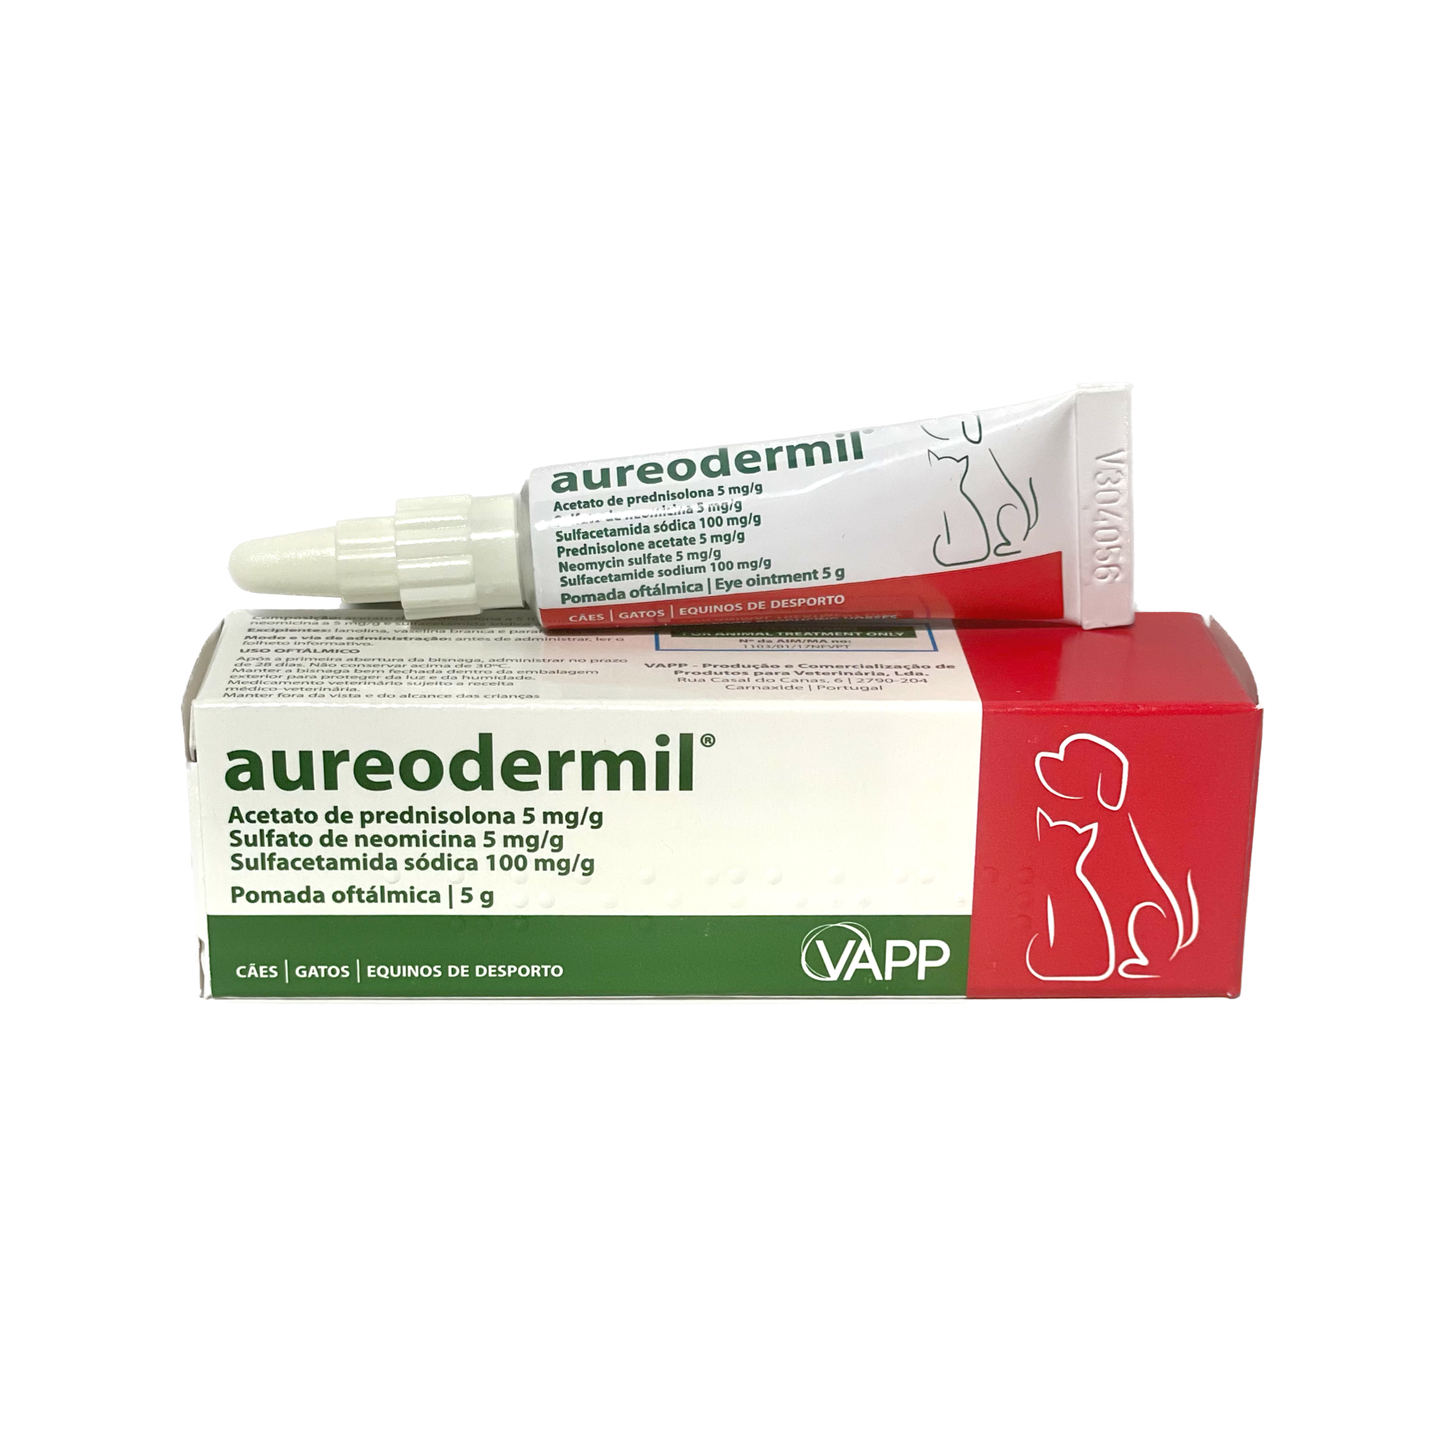 Aureodermil 5g (Neomycin + Prednisolone + Sulfacetamide)